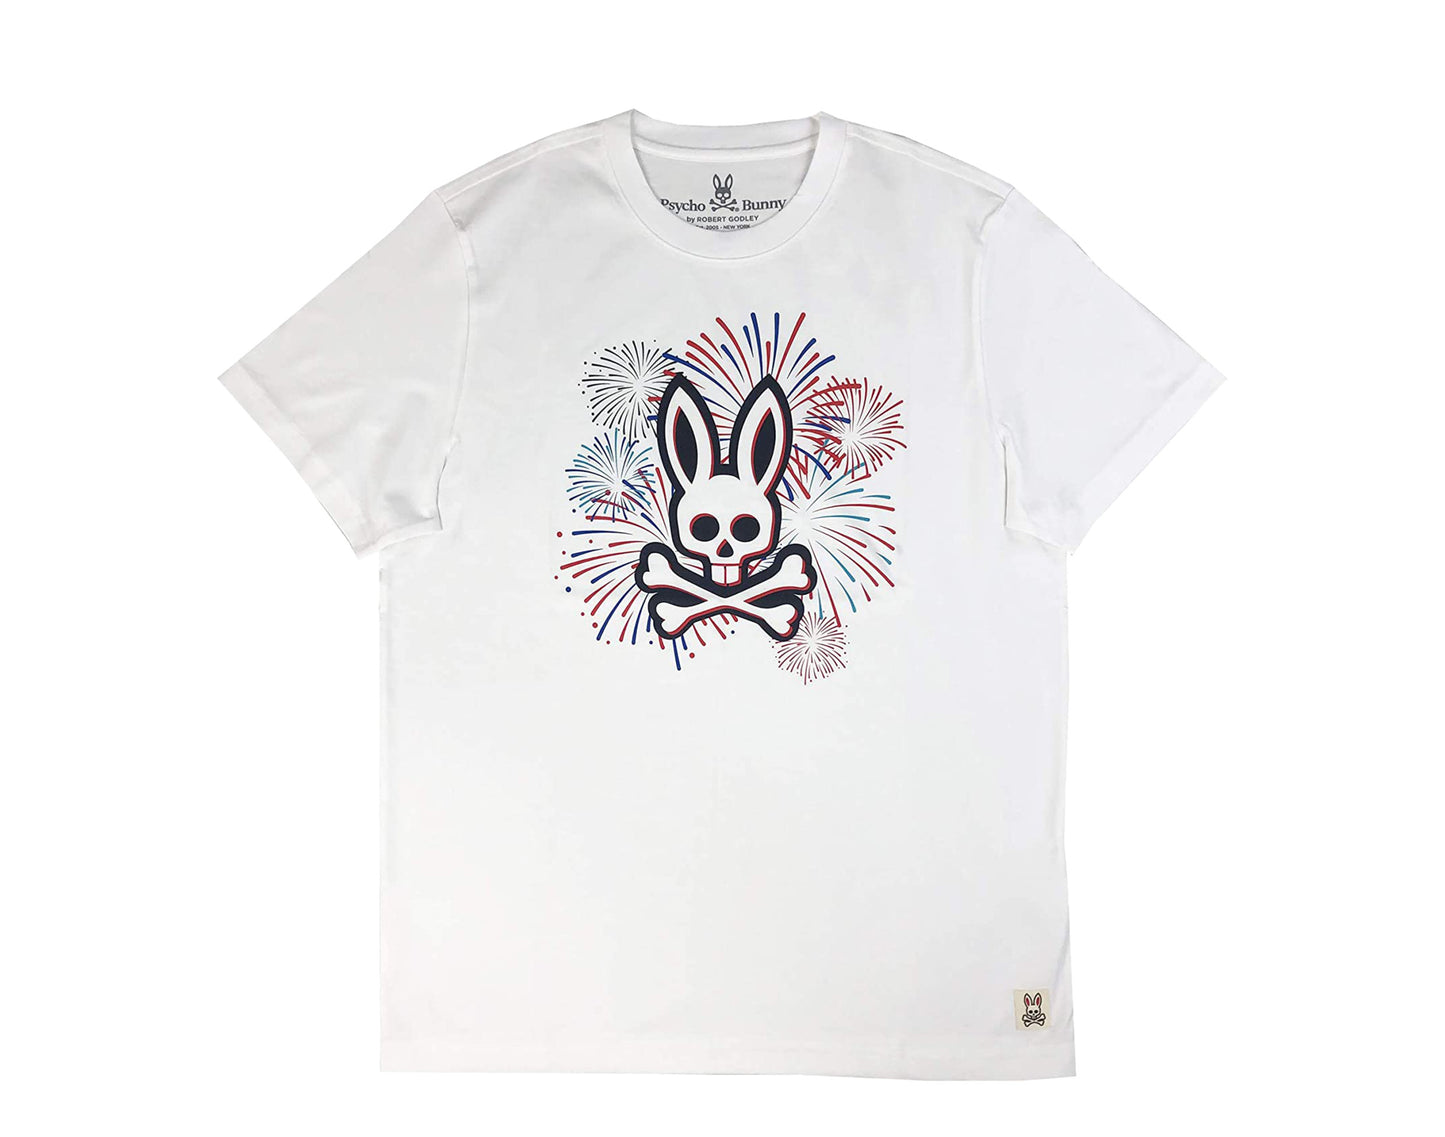 Psycho Bunny Festival Graphic White/Multi-Color Men's Tee Shirt B6U641H1PC-WHT